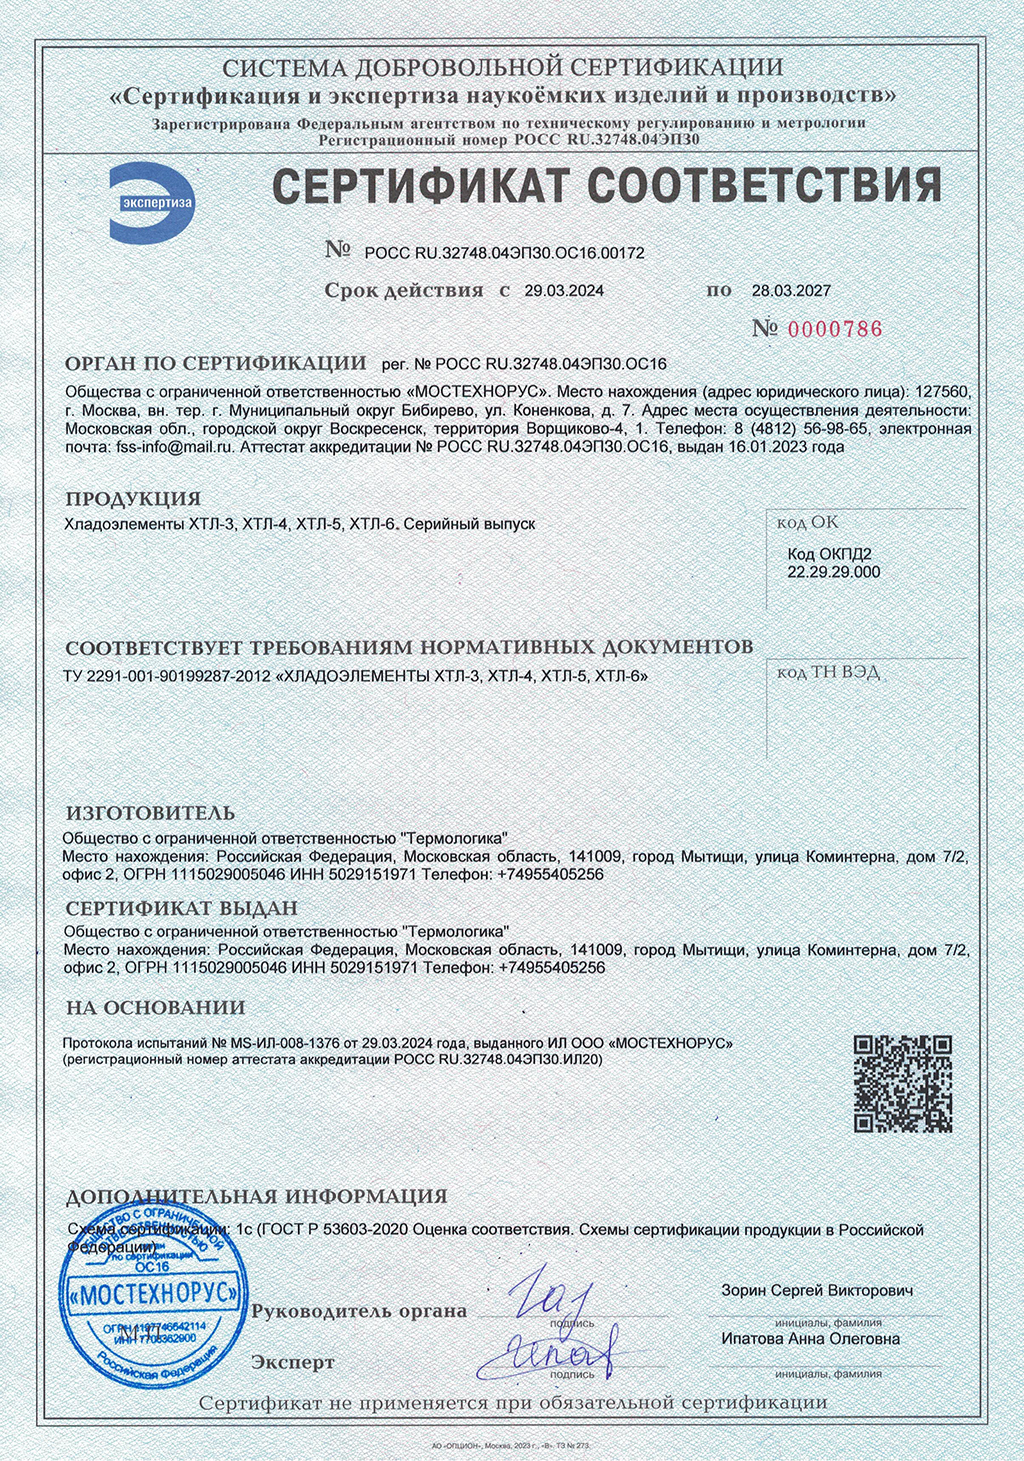 Сертификат хладоэлементы Термологика ХТЛ-3, ХТЛ-4, ХТЛ-5, ХТЛ-6